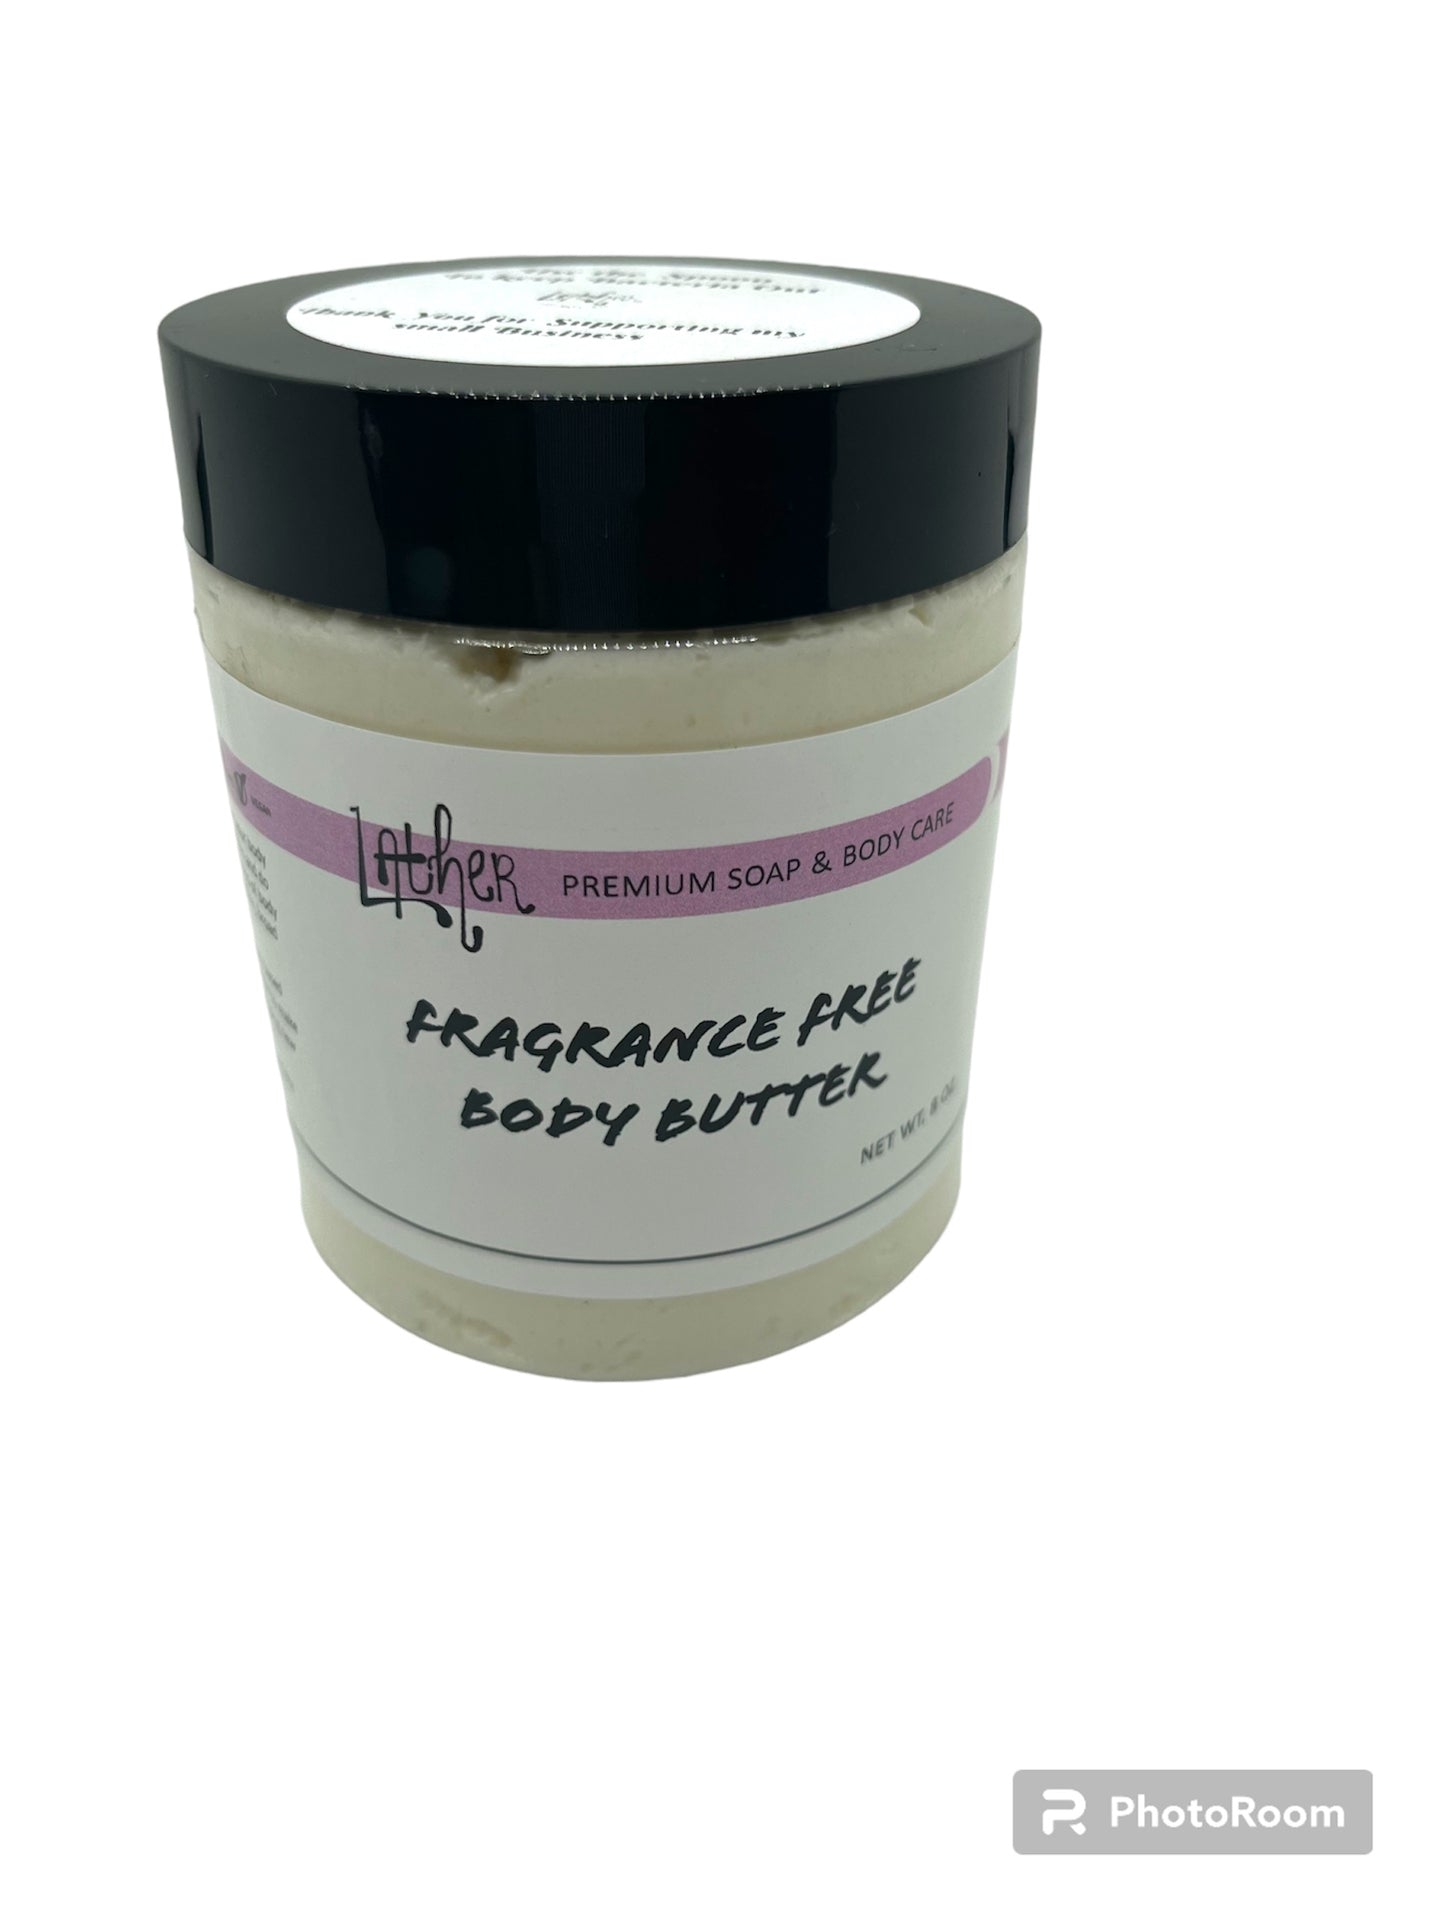 Fragrance Free Body Butter